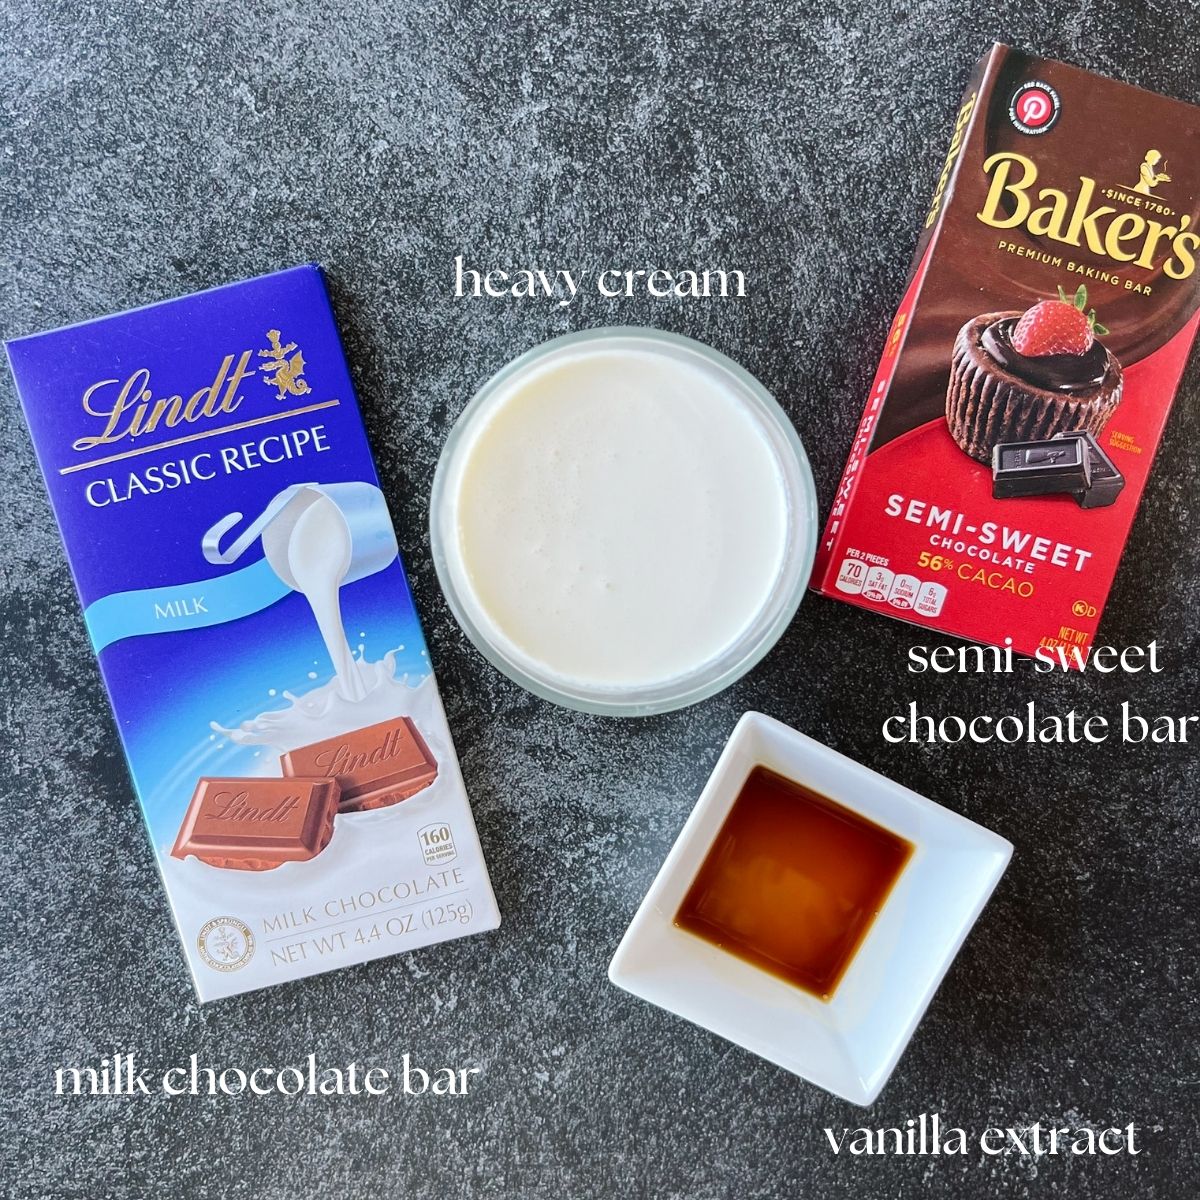 Ingredients shot for the ganache: semi-sweet chocolate bar, milk chocolate bar, heavy cream, and vanilla extract. 